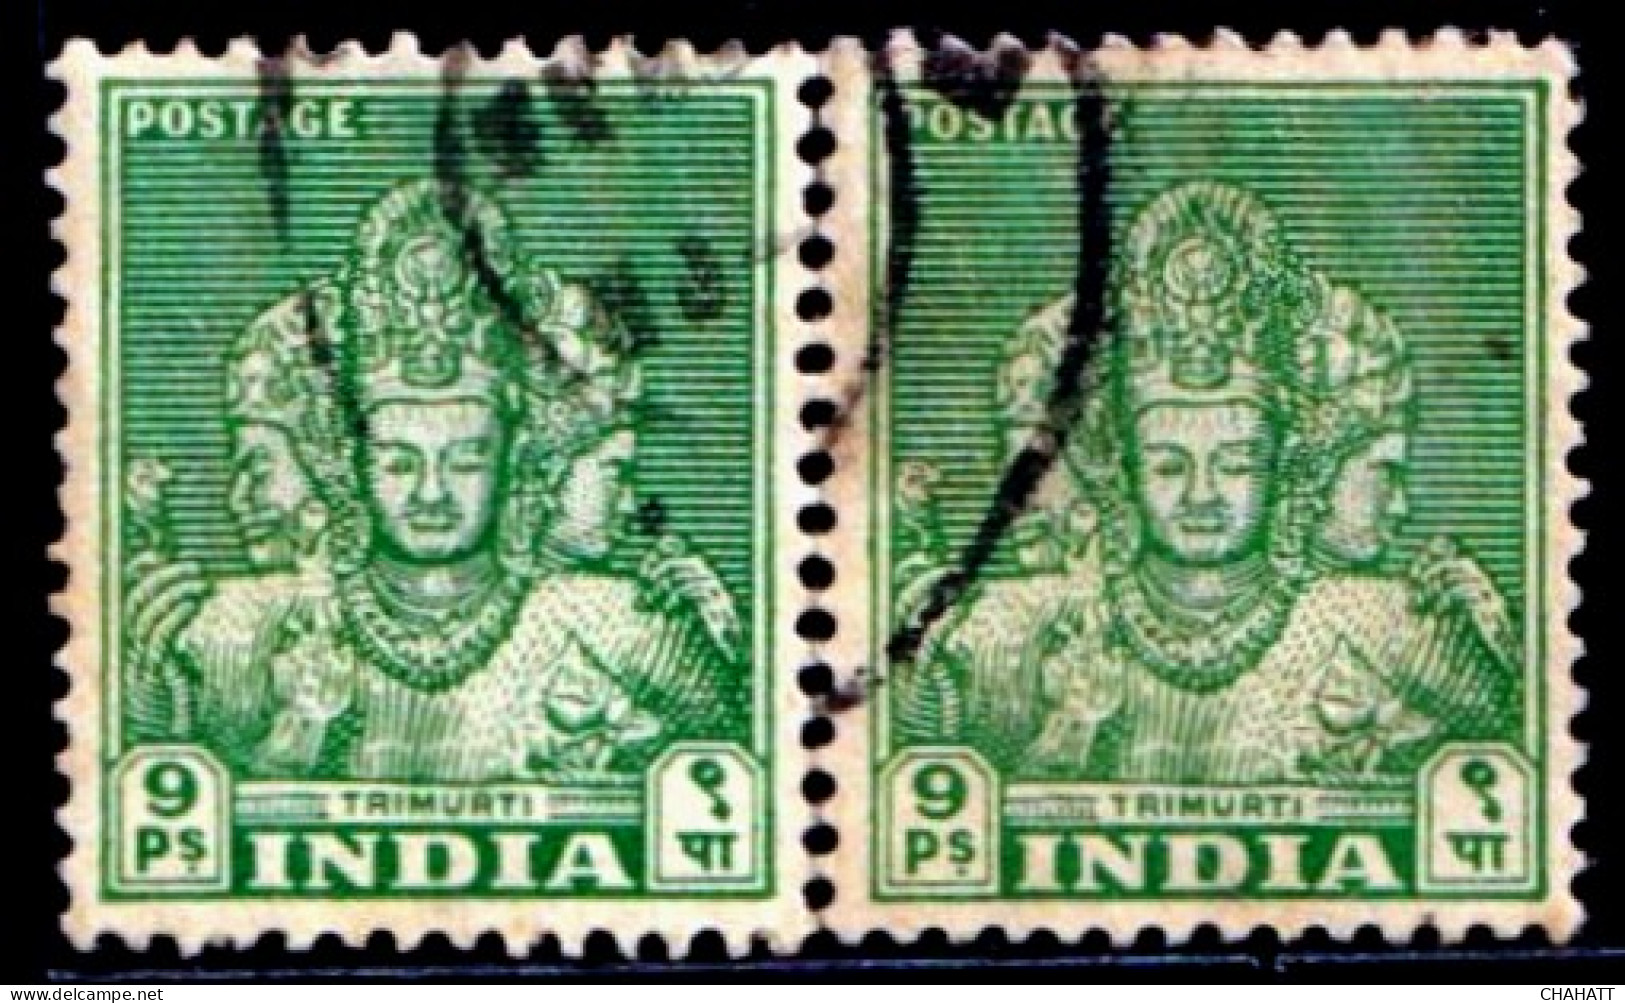 HINDUISM- ARCHAEOLOGICAL SERIES-9 PAISA- TRIMURTI-ELEPHANTA CAVES- ERROR-COLOR VARIETIY- SCARCE-INDIA-1949-FU-IE-94 - Hinduism